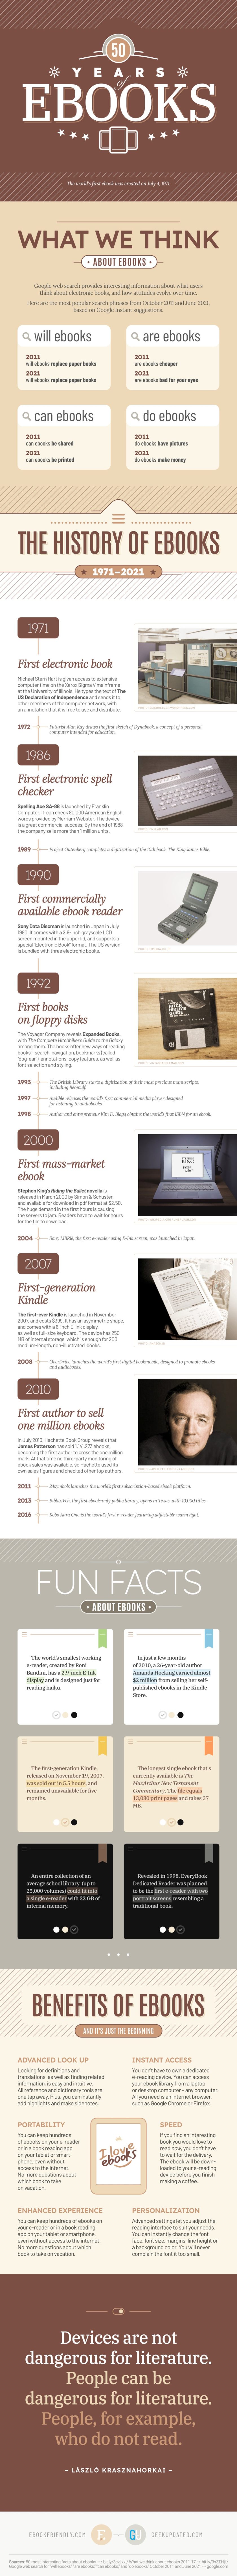 50 years of ebooks - full infographic